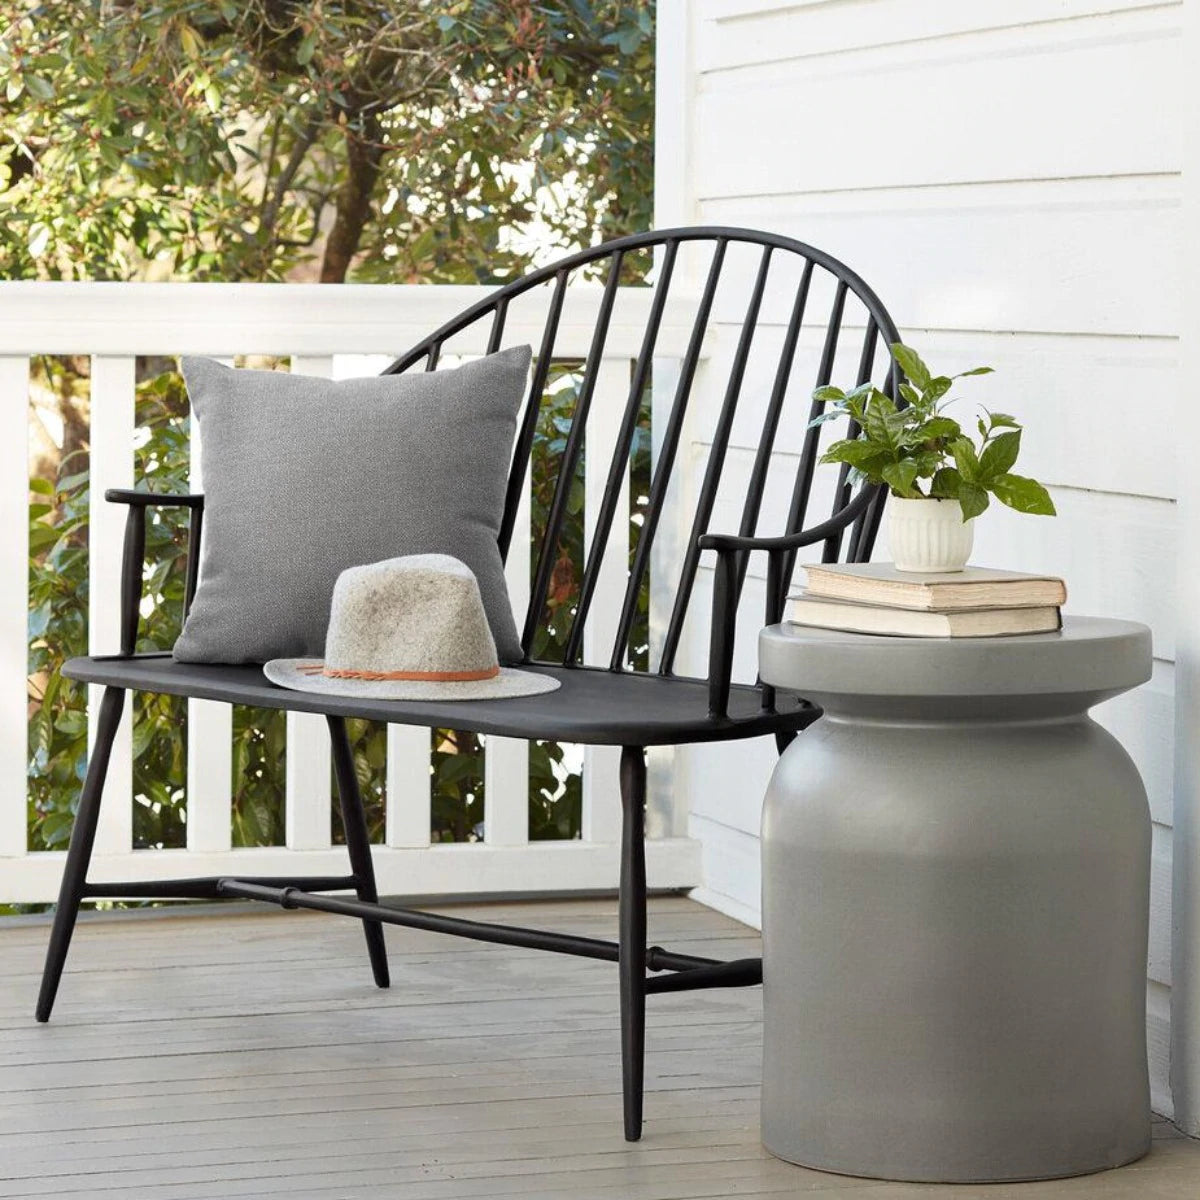 Garden Benches & Chairs